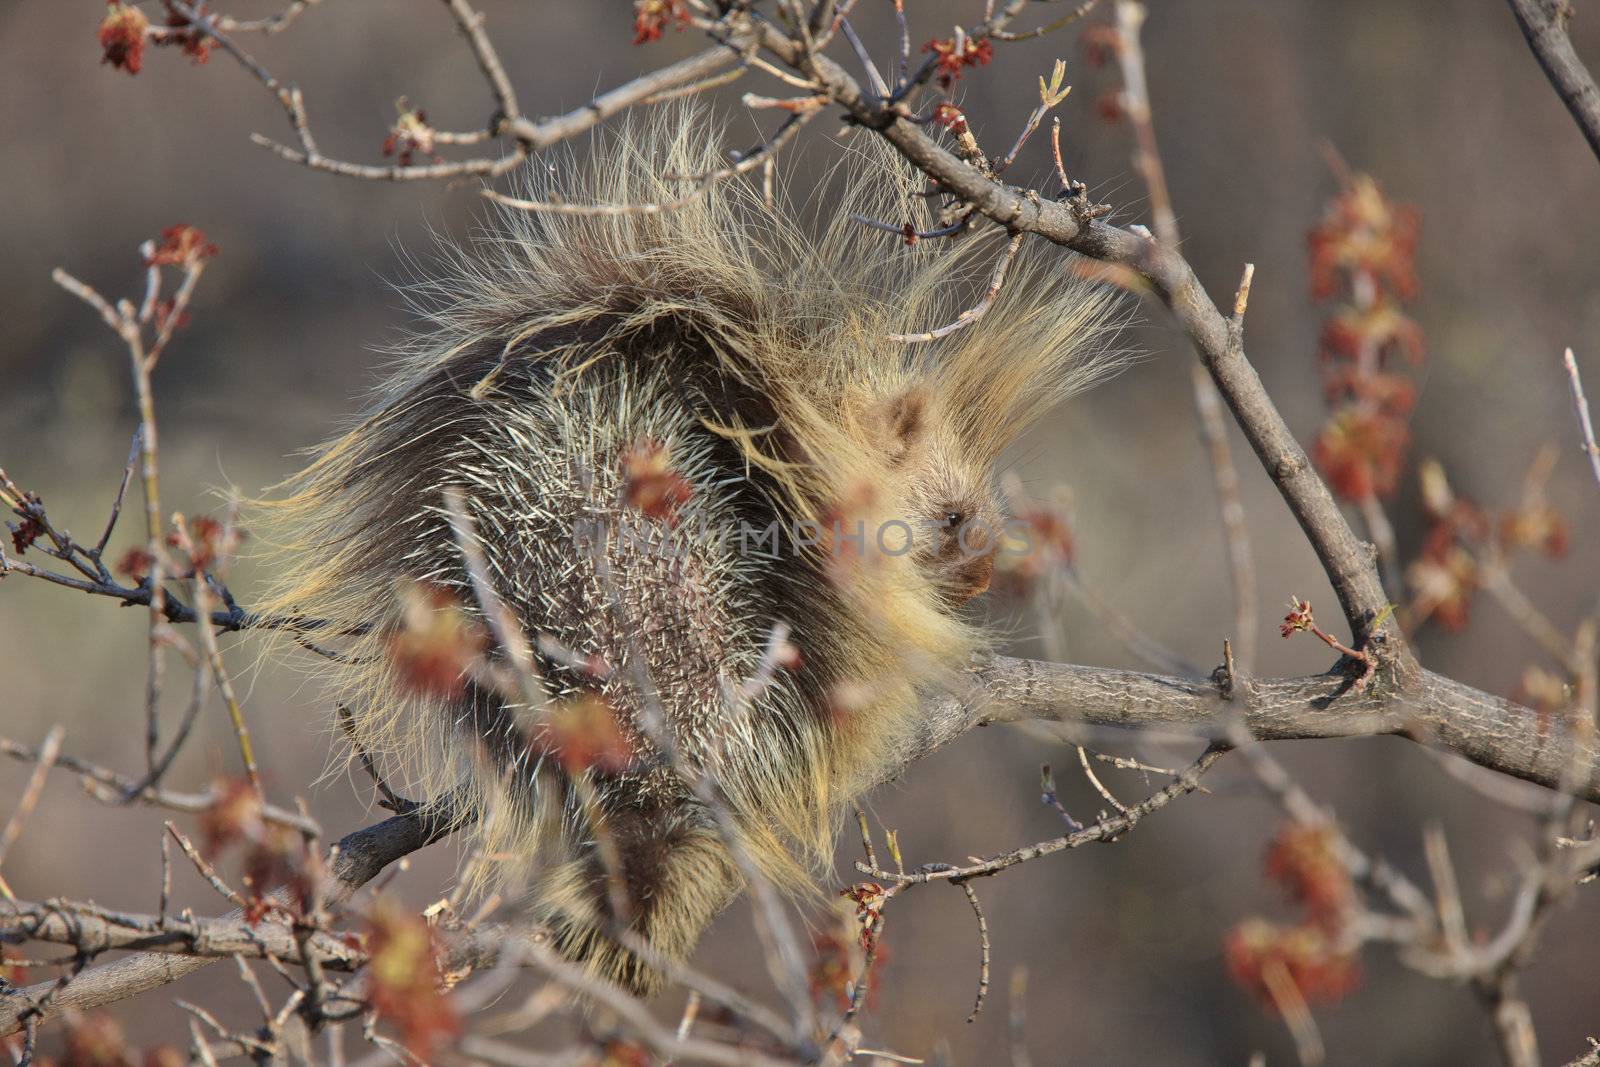 Porcupine in tree Saskatchewan Canada